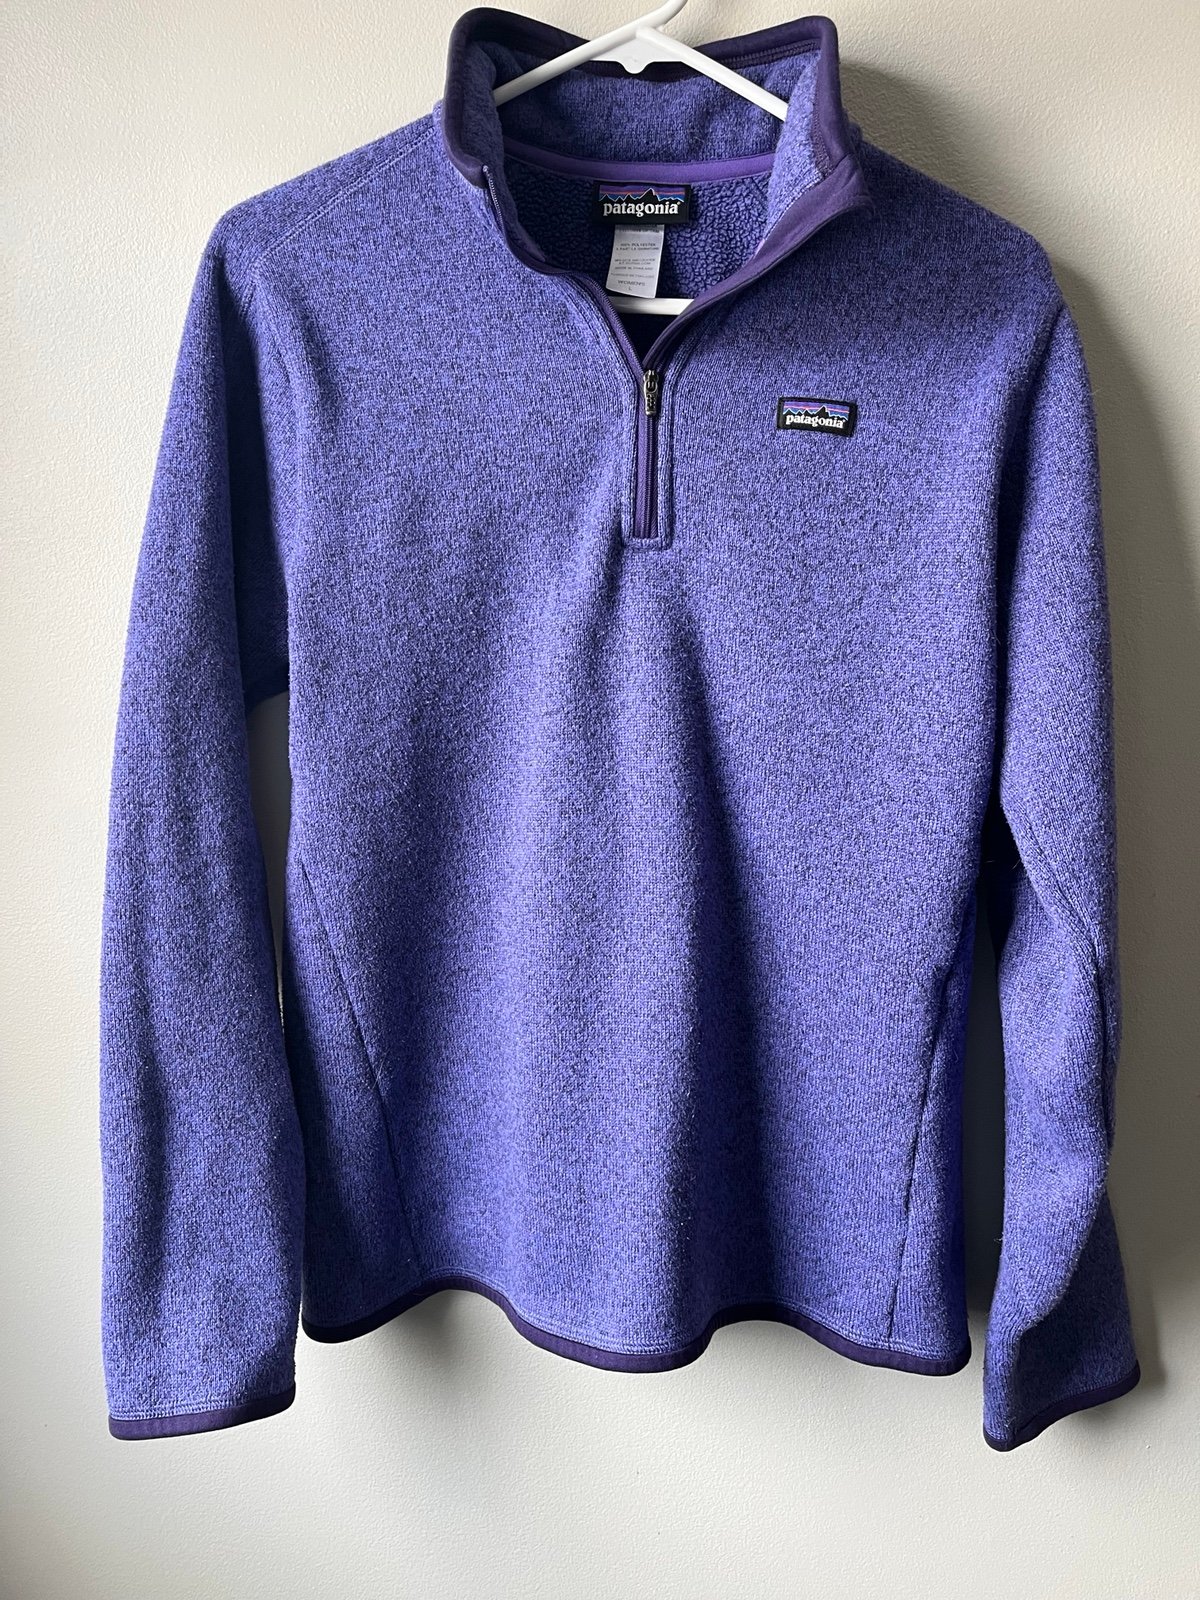 reasonable price Patagonia Better Sweater 1/4 Zip Fleec